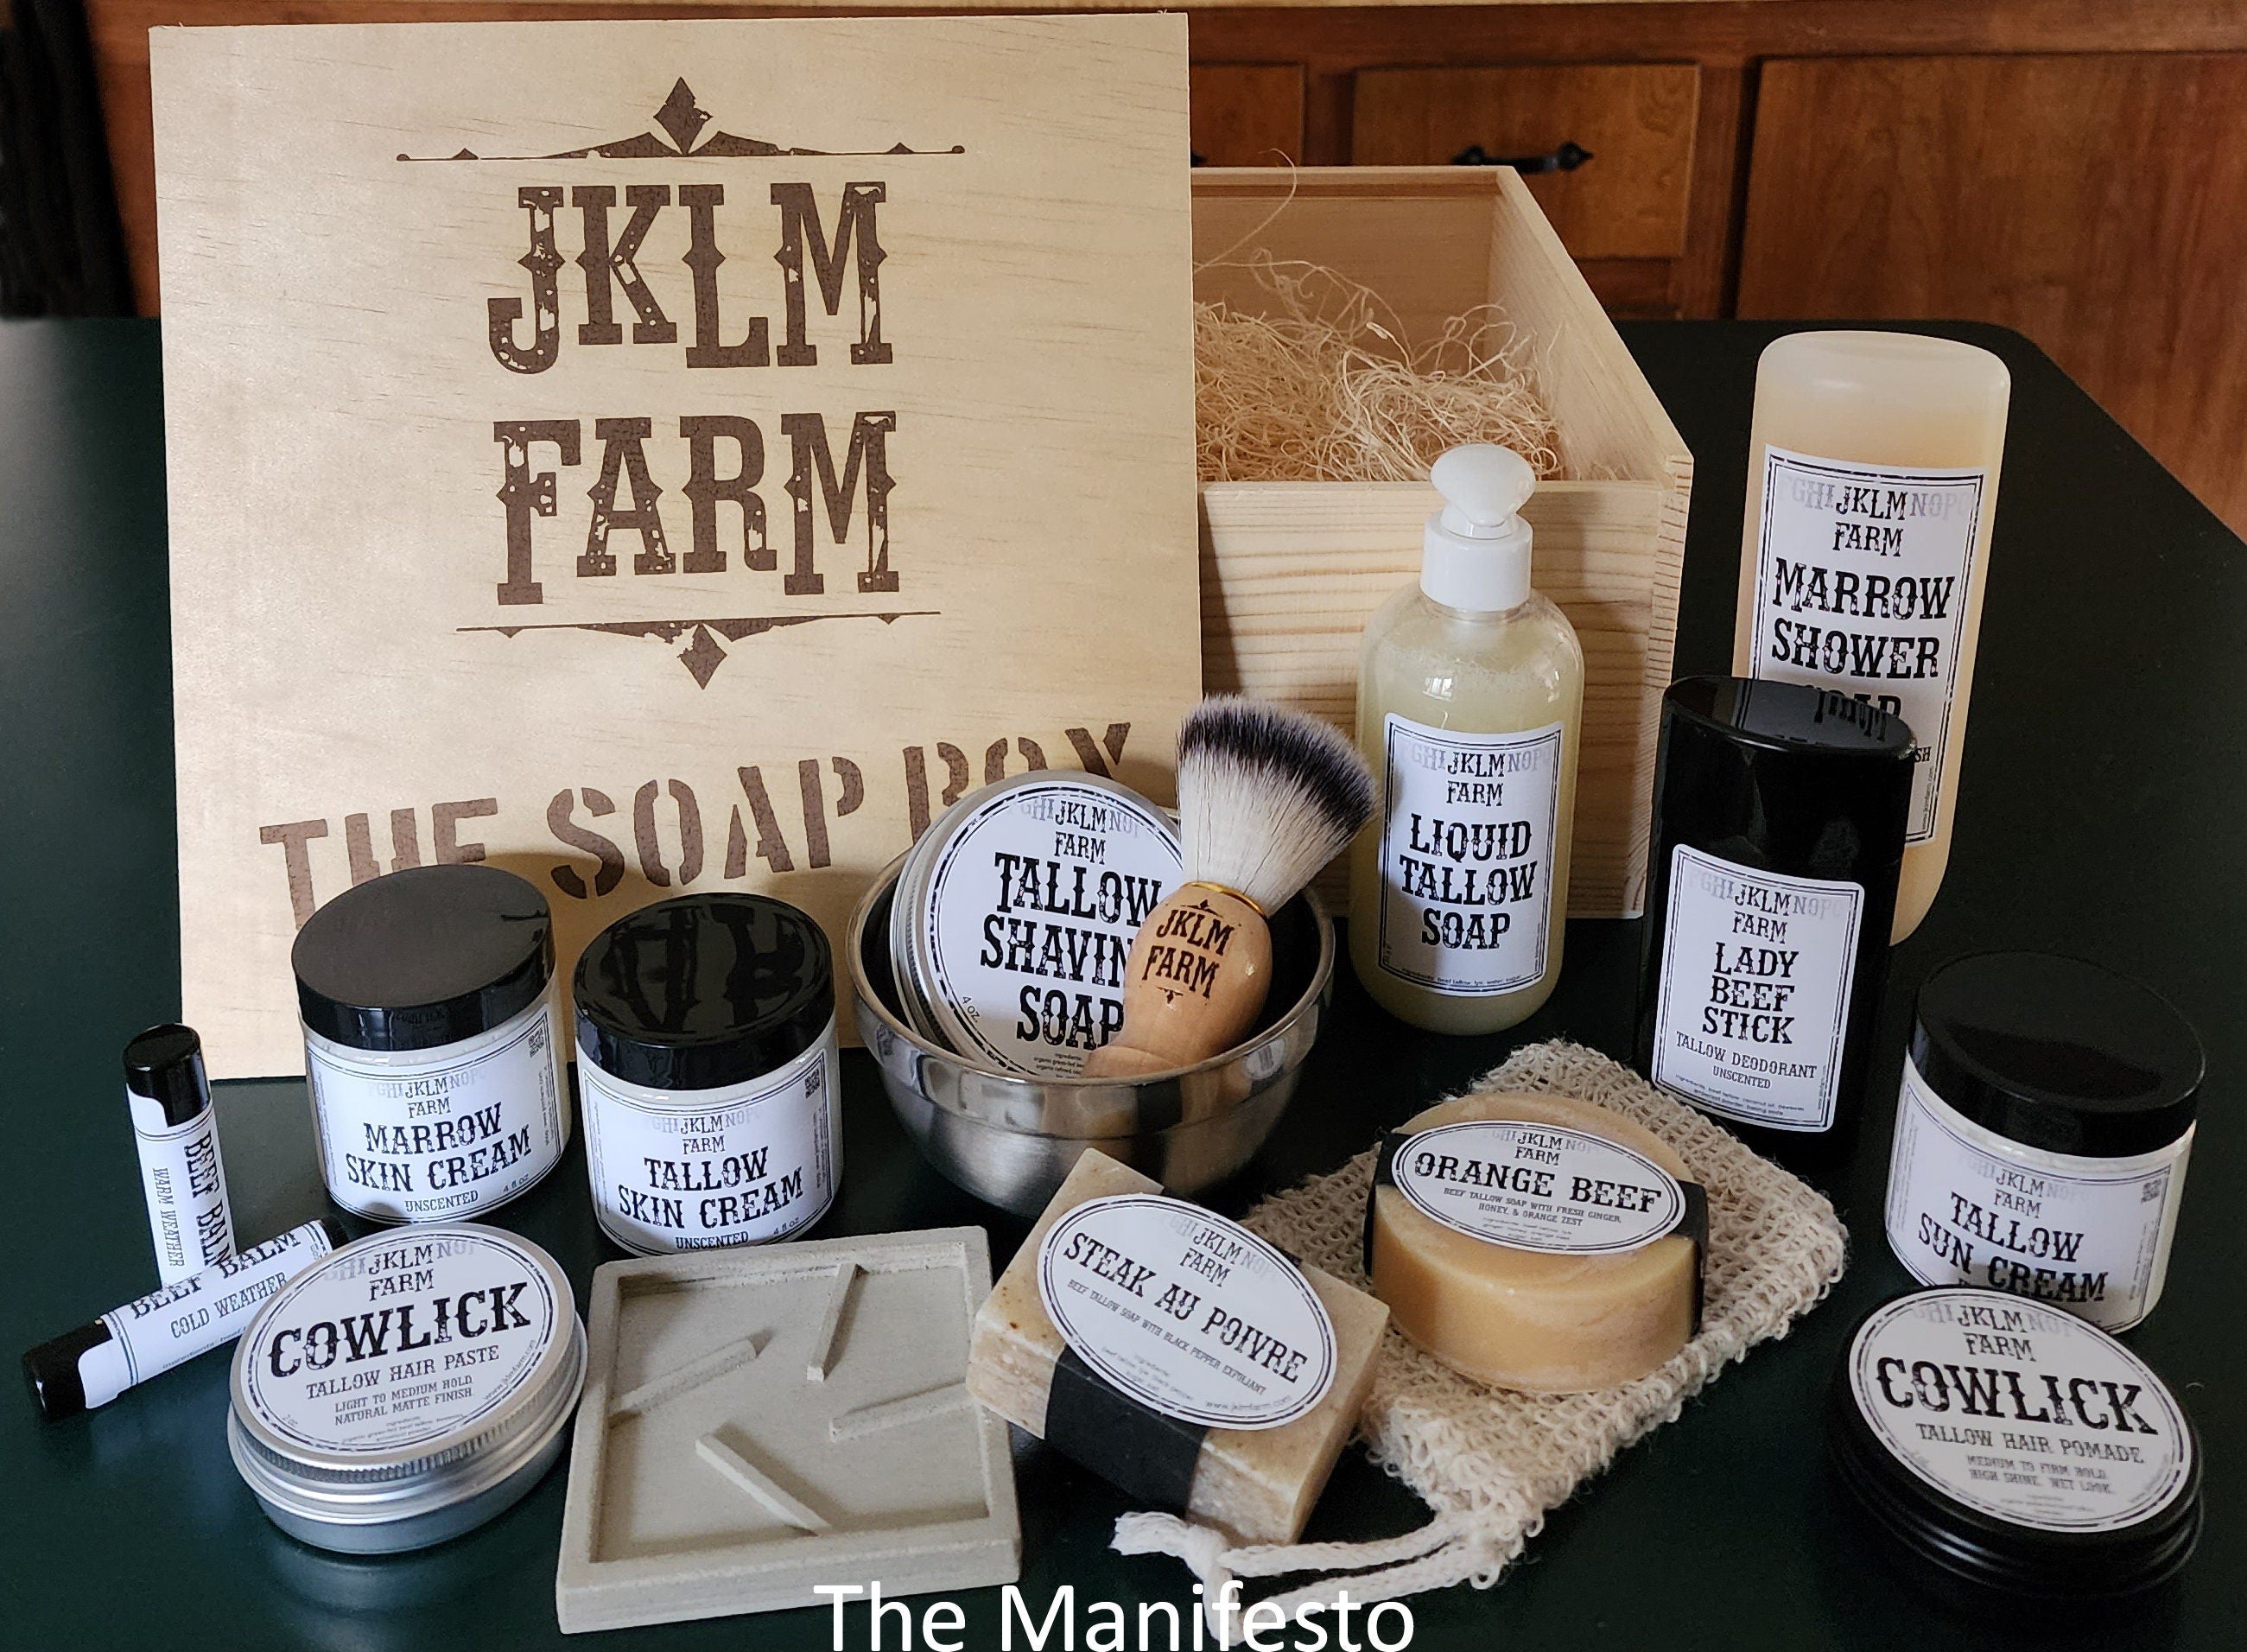 jklm farm natural organic grass-fed tallow marrow soap box gift set manifesto